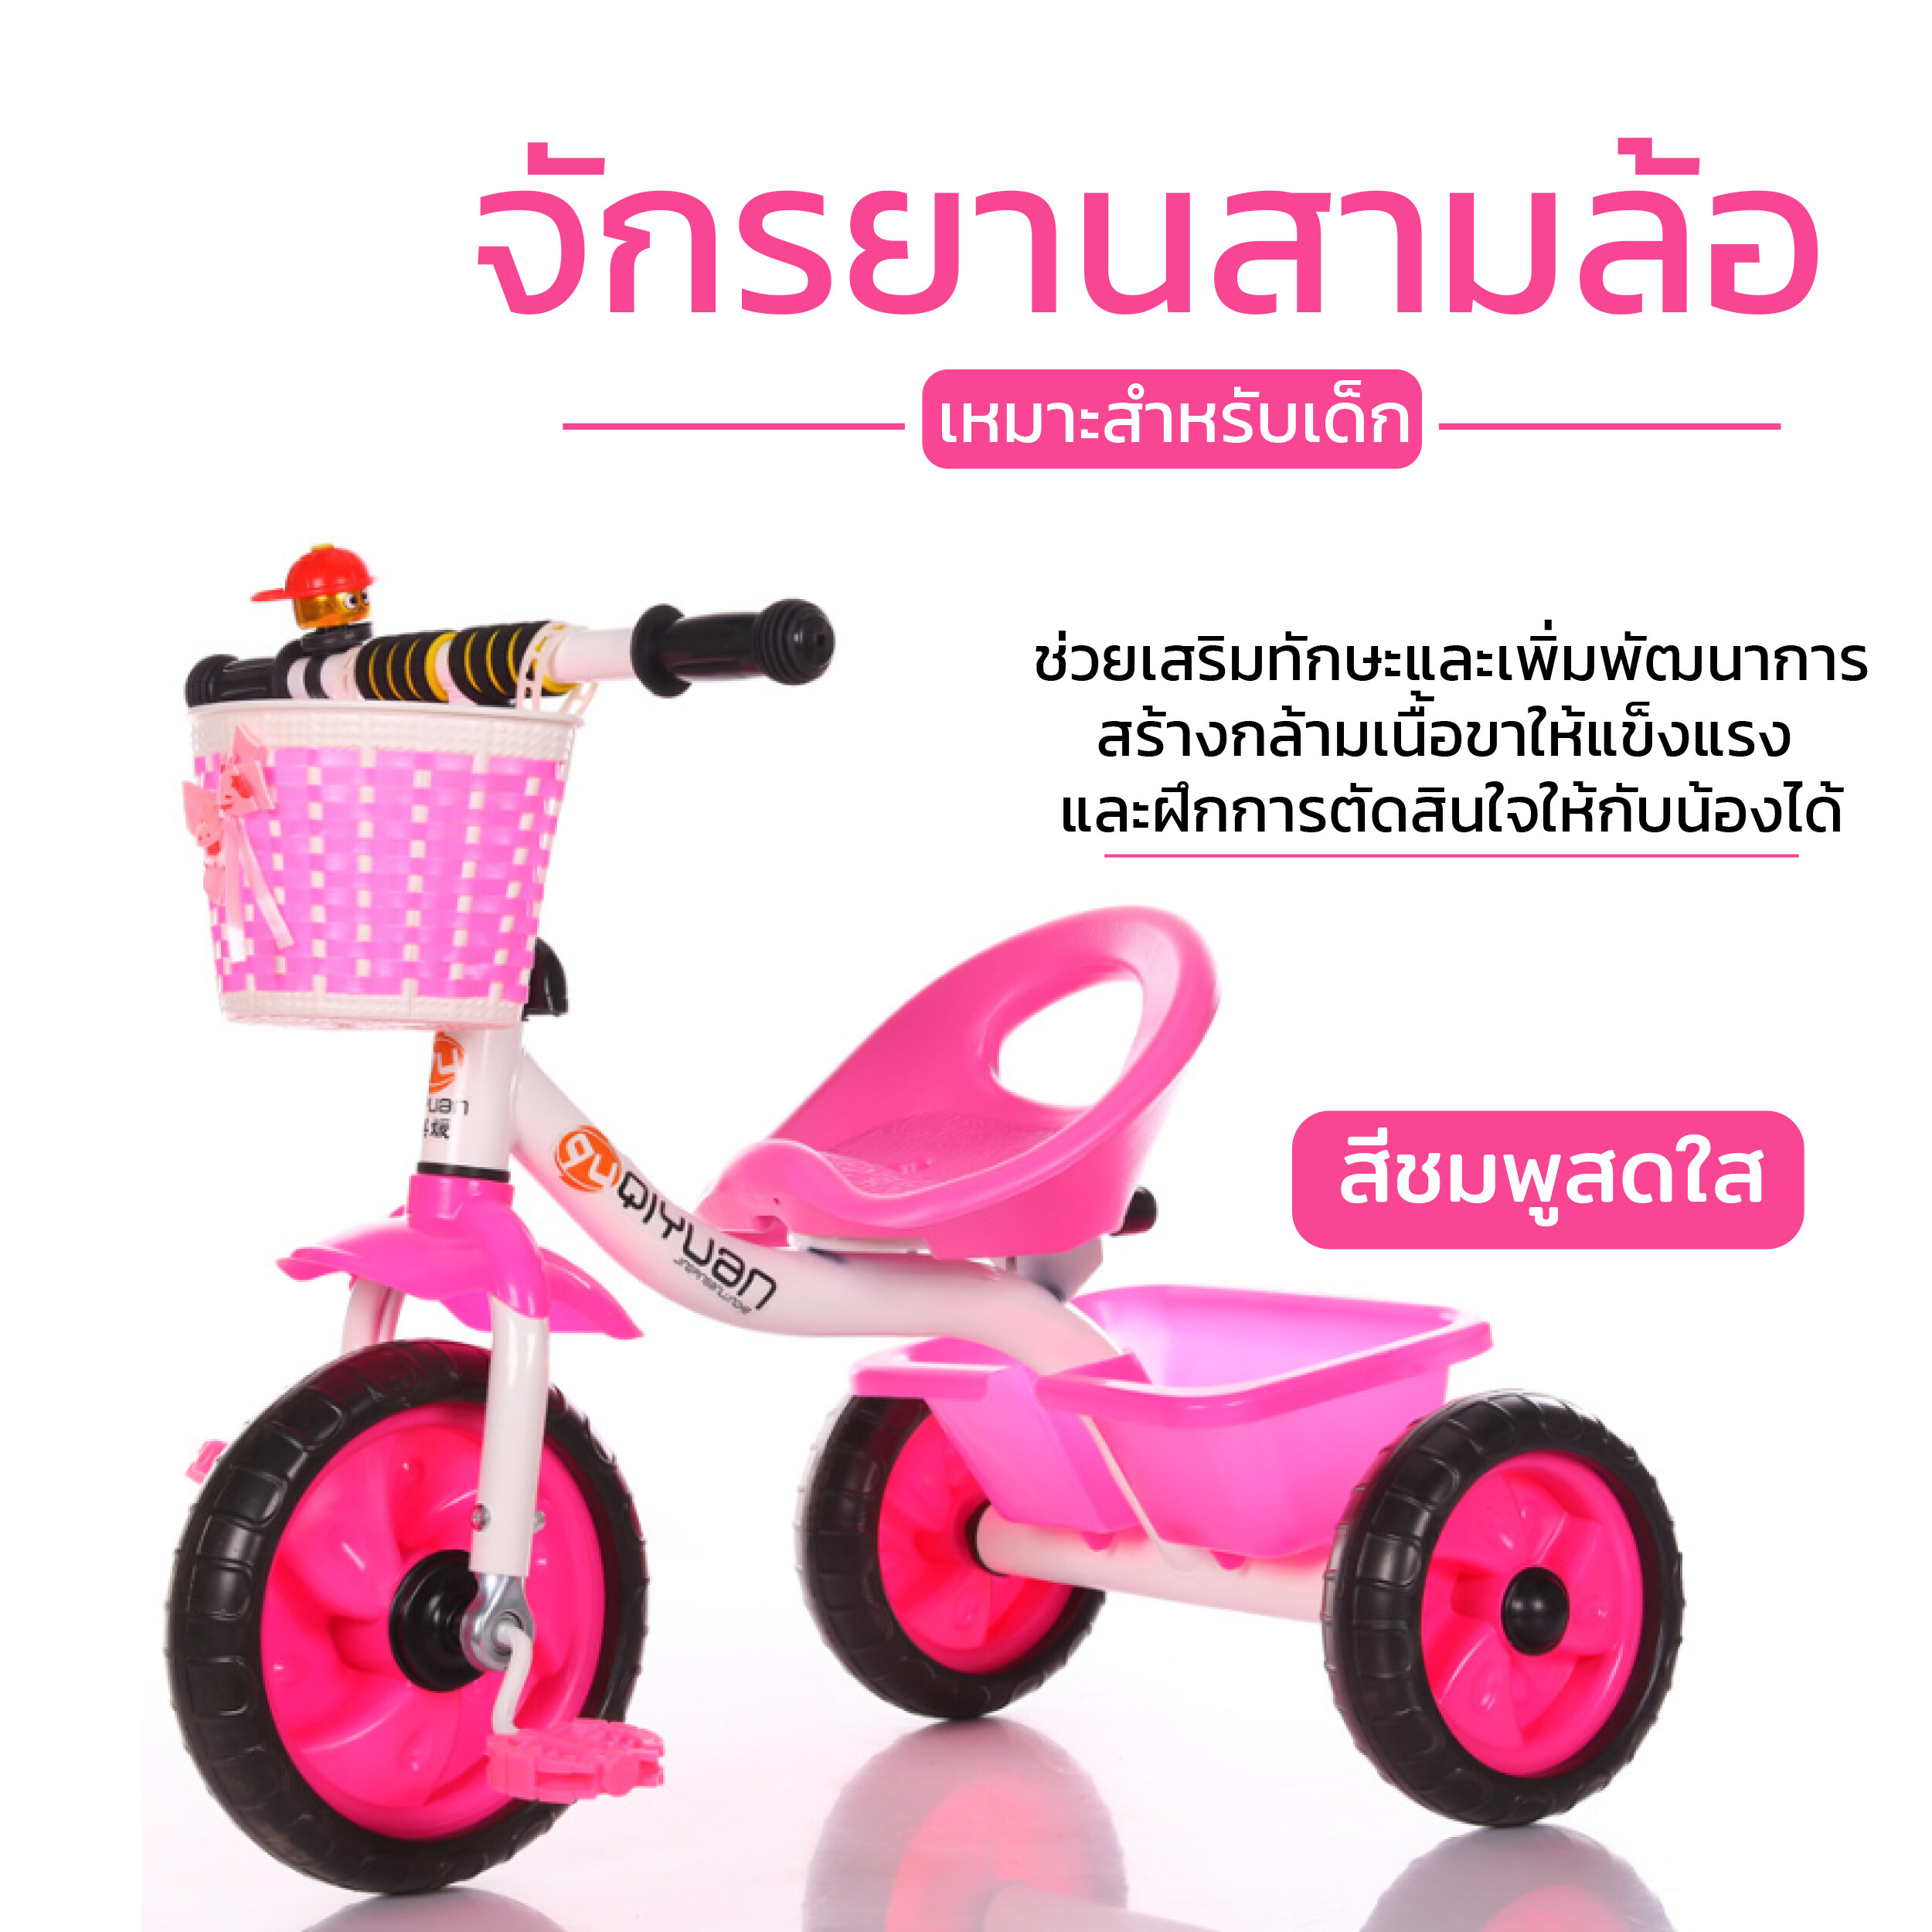 Superseller dee taxt-รถจักรยานเด็ก รถจักรยานเด็ก 3 ล้อ จักรยานเด็ก มีตระกร้าด้านหลัง สำหรับเด็ก 2 ขวบขึ้น (PINK)